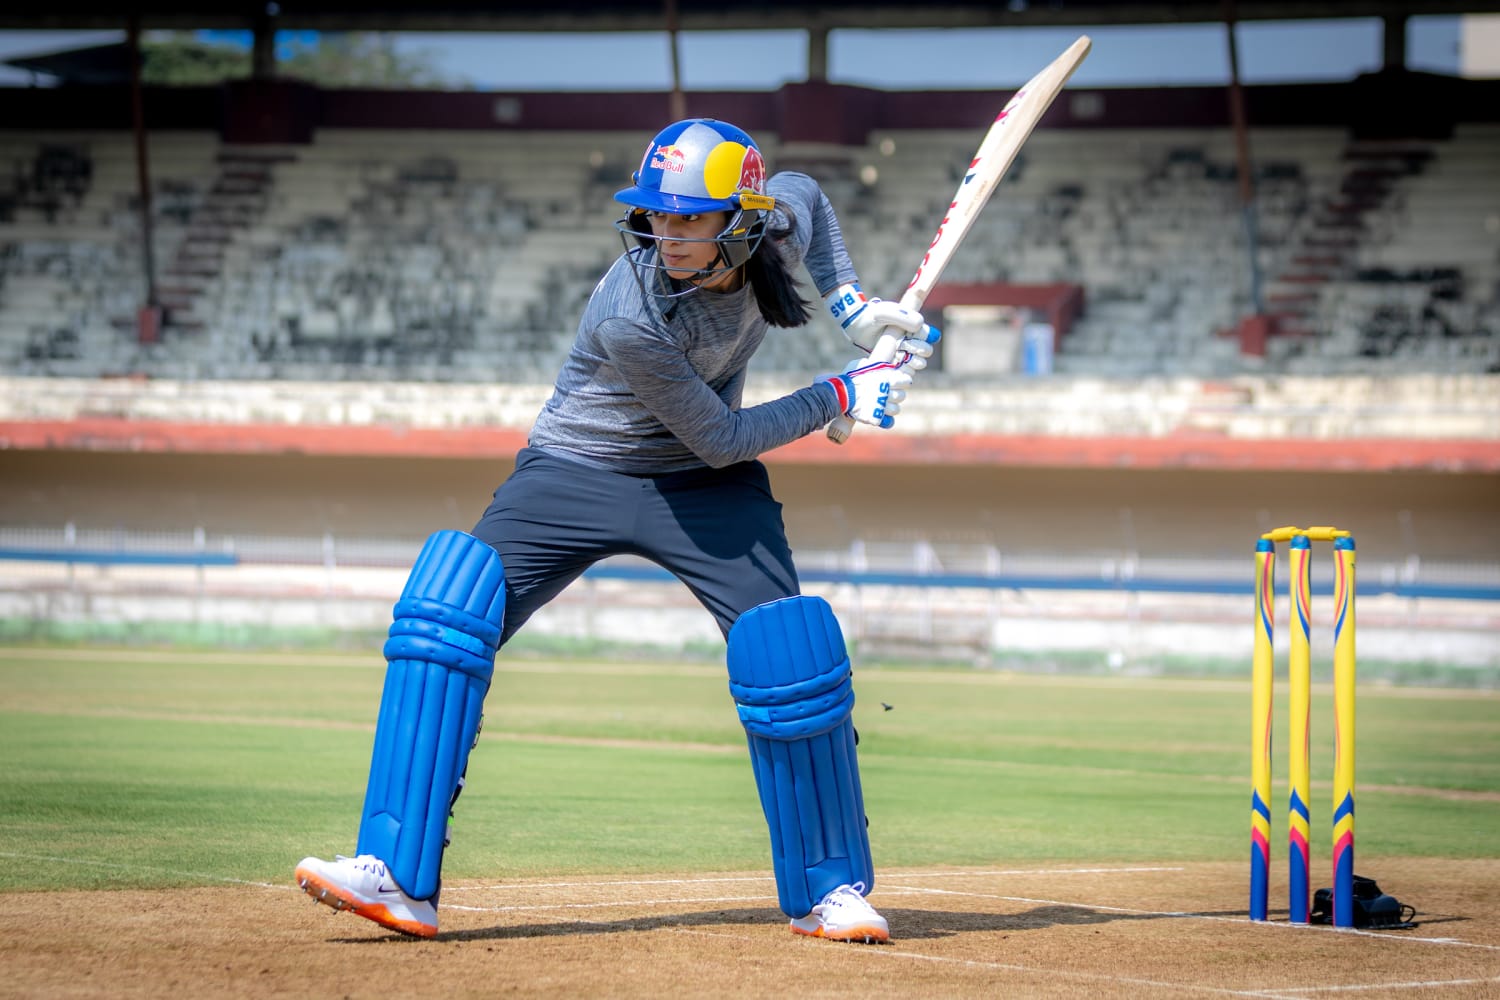 Cricket Batting Tips: Stance, Balance And Batswing